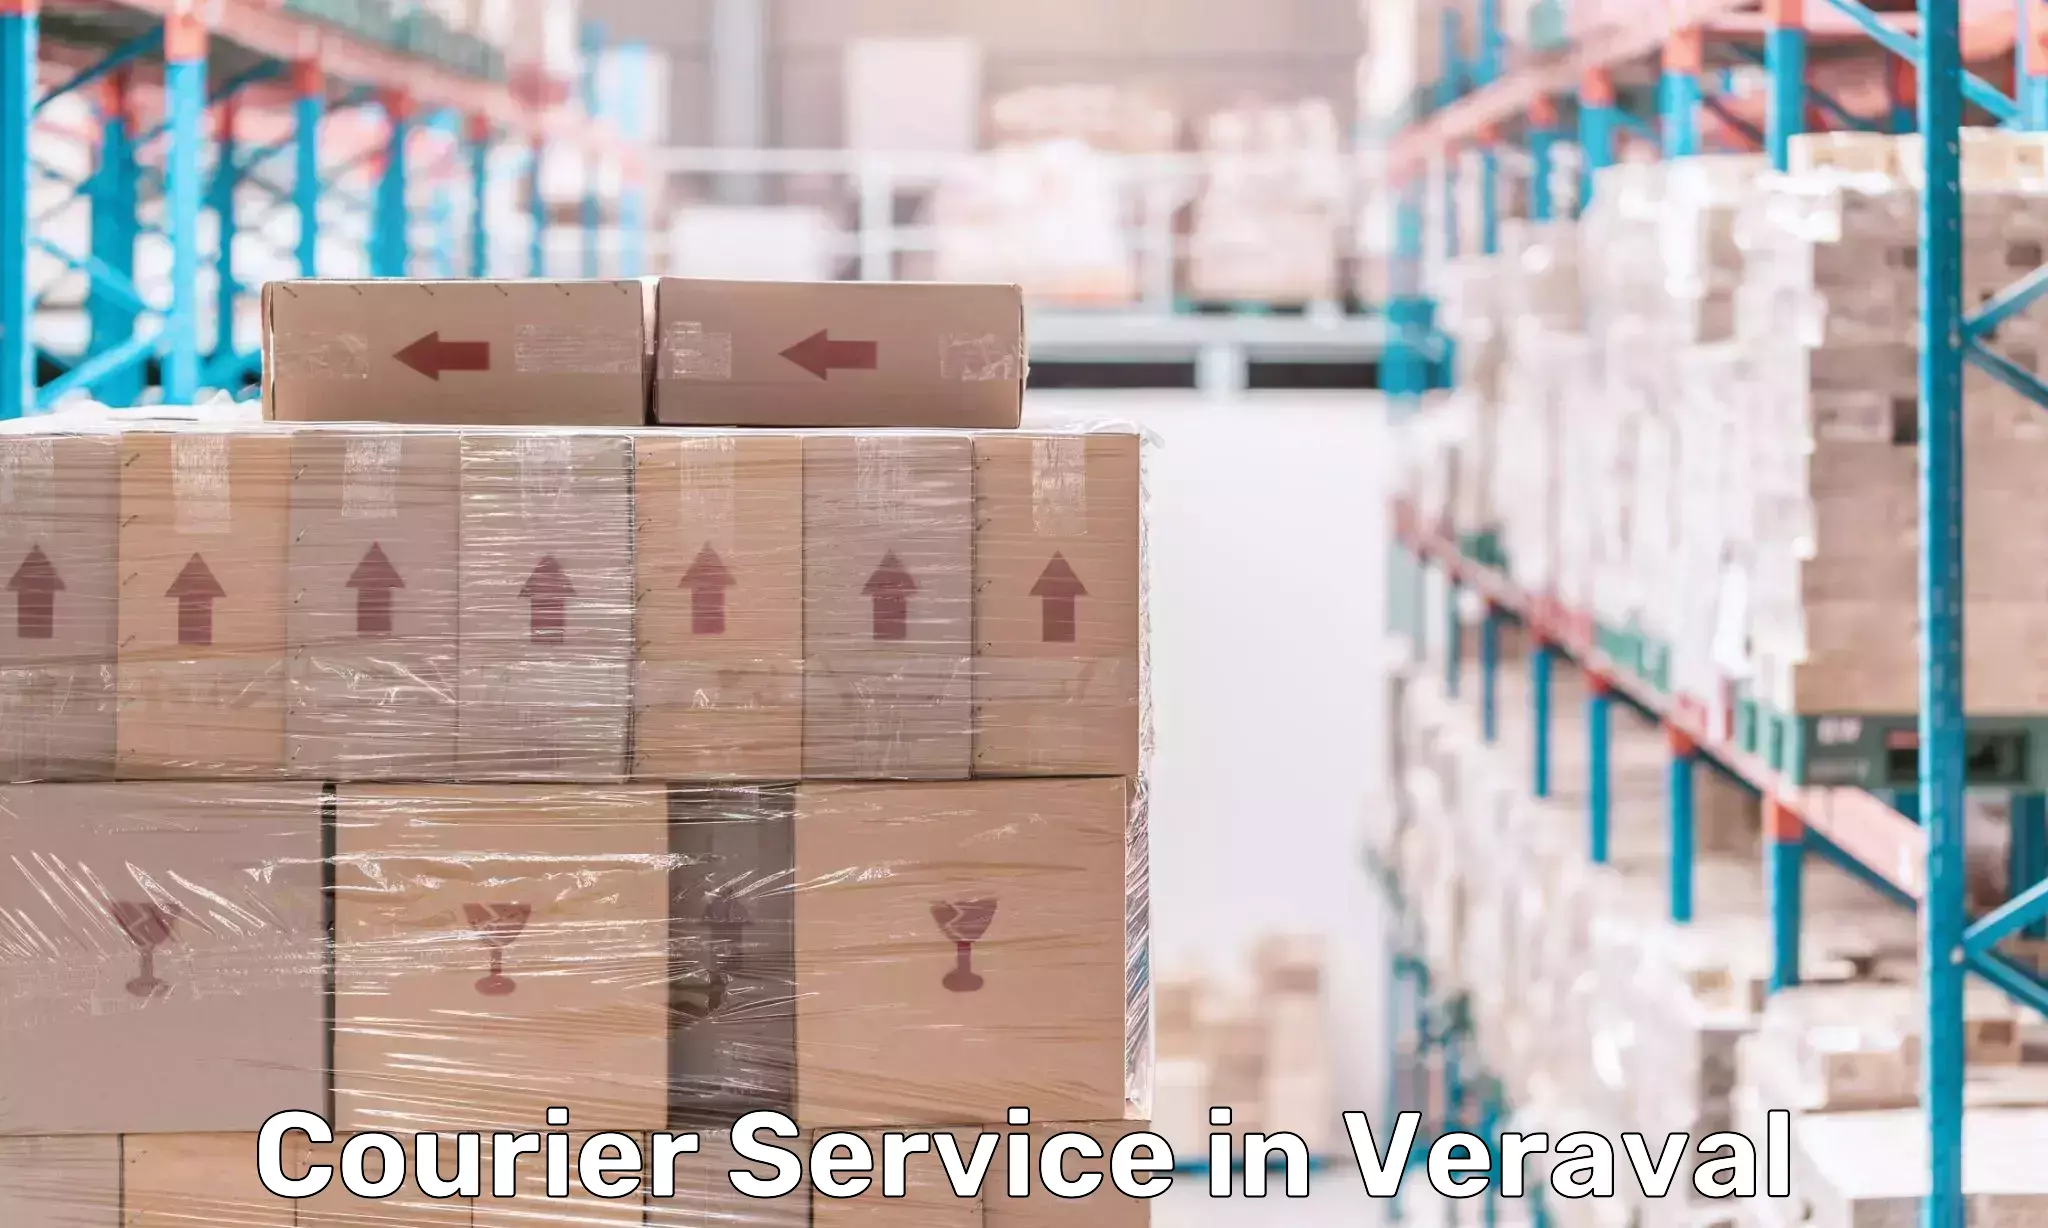 Express logistics providers in Veraval